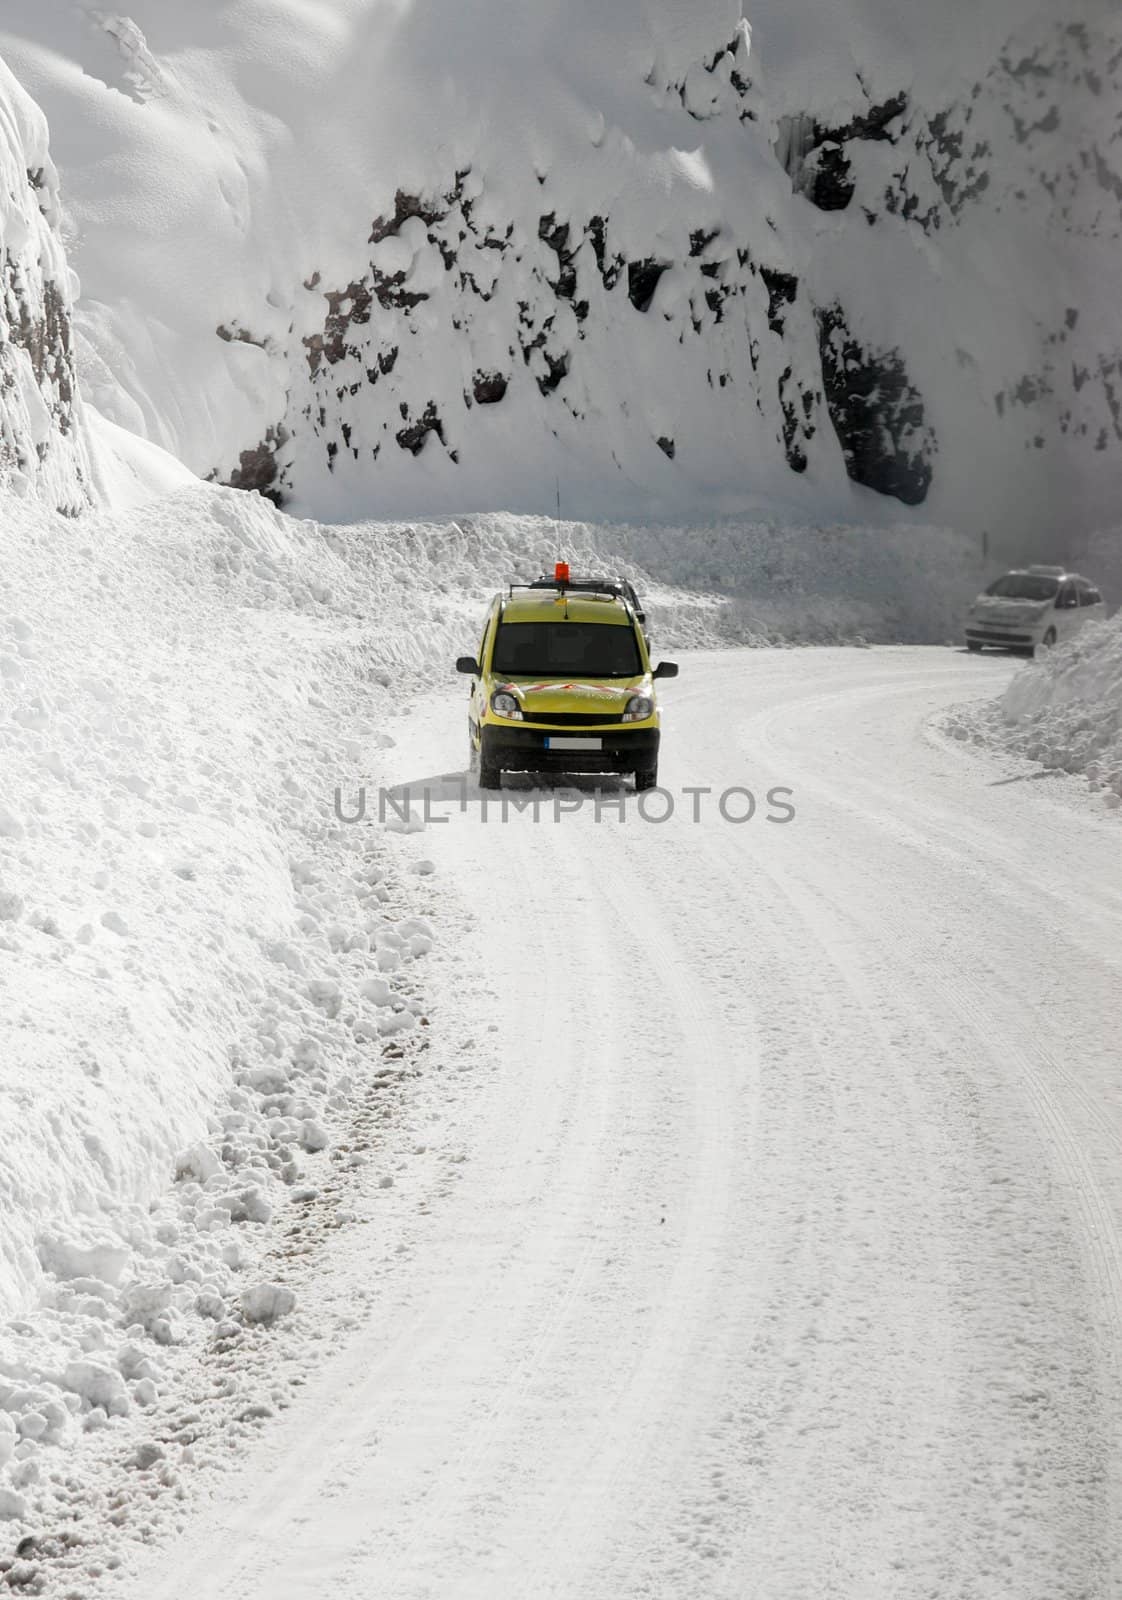 Winter road by Gudella